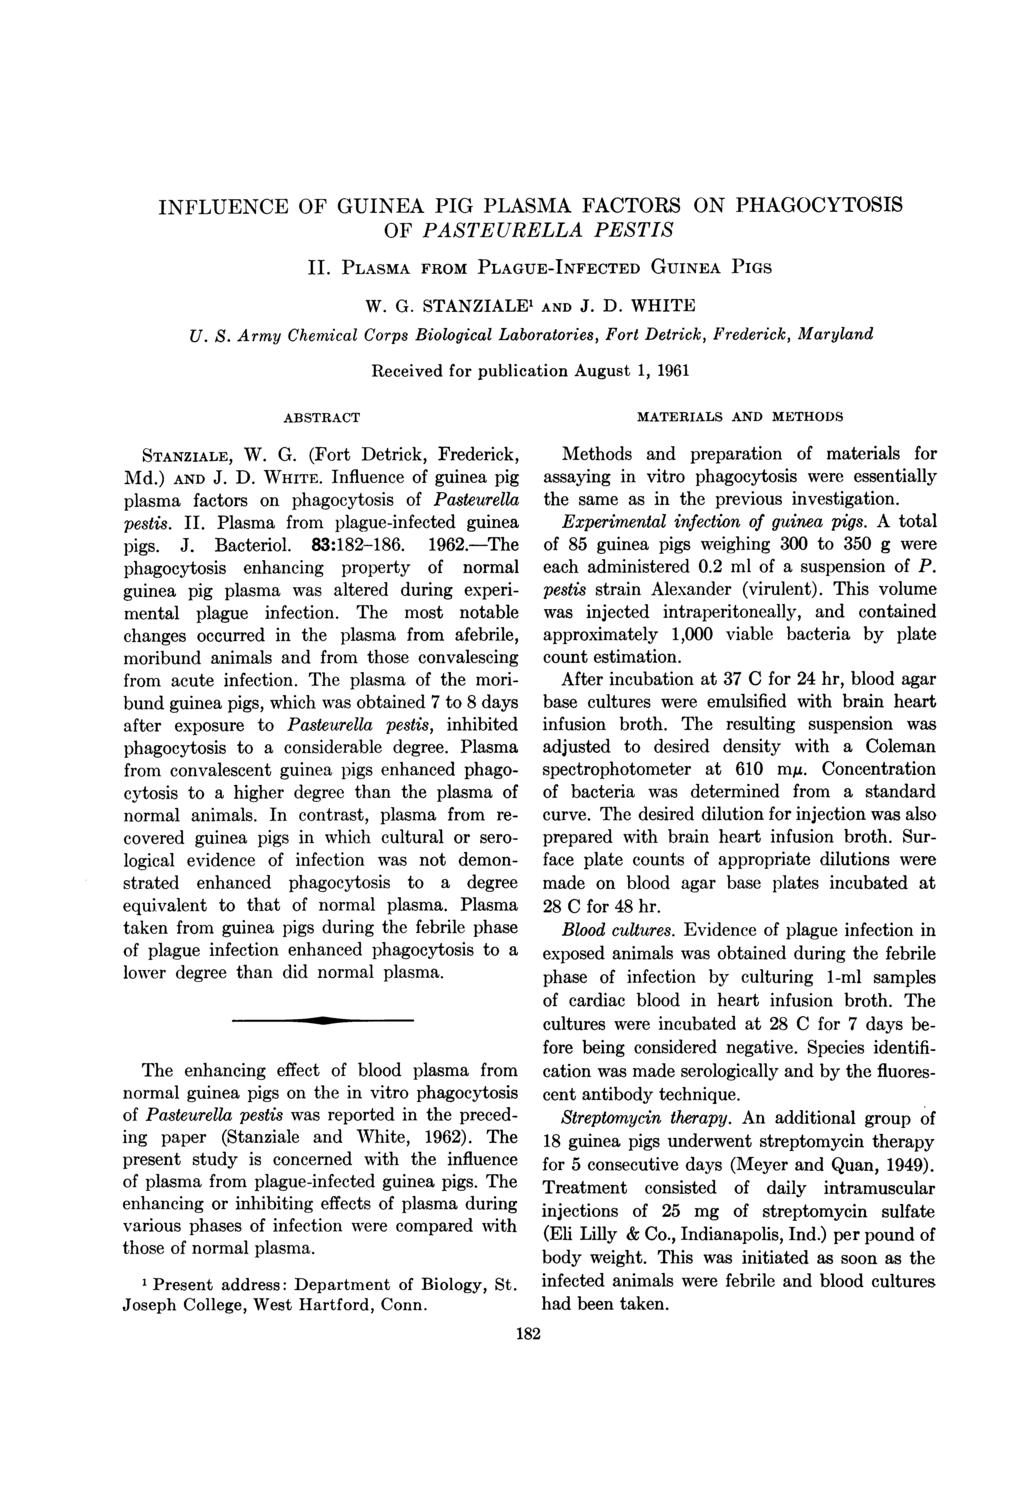 INFLUENCE OF GUINEA PIG PLASMA FACTORS ON PHAGOCYTOSIS OF PASTEURELLA PESTIS II. PLASMA FROM PLAGUE-INFECTED GUINEA PIGS W. G. ST